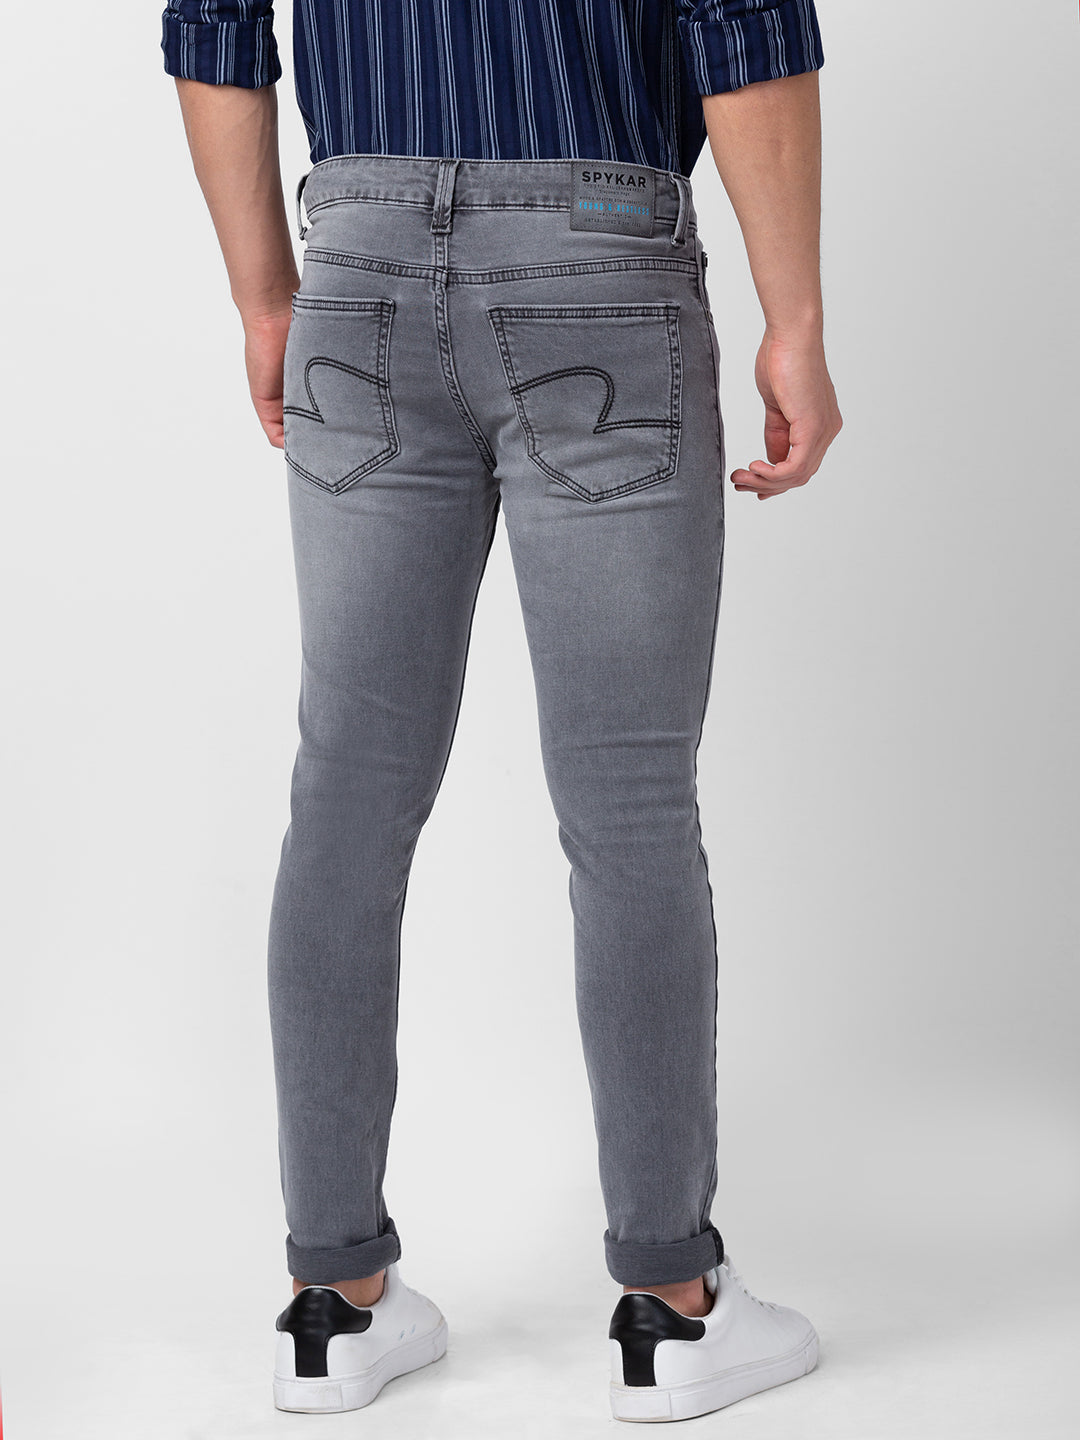 SPYKAR Jeans | TBI Wholesale